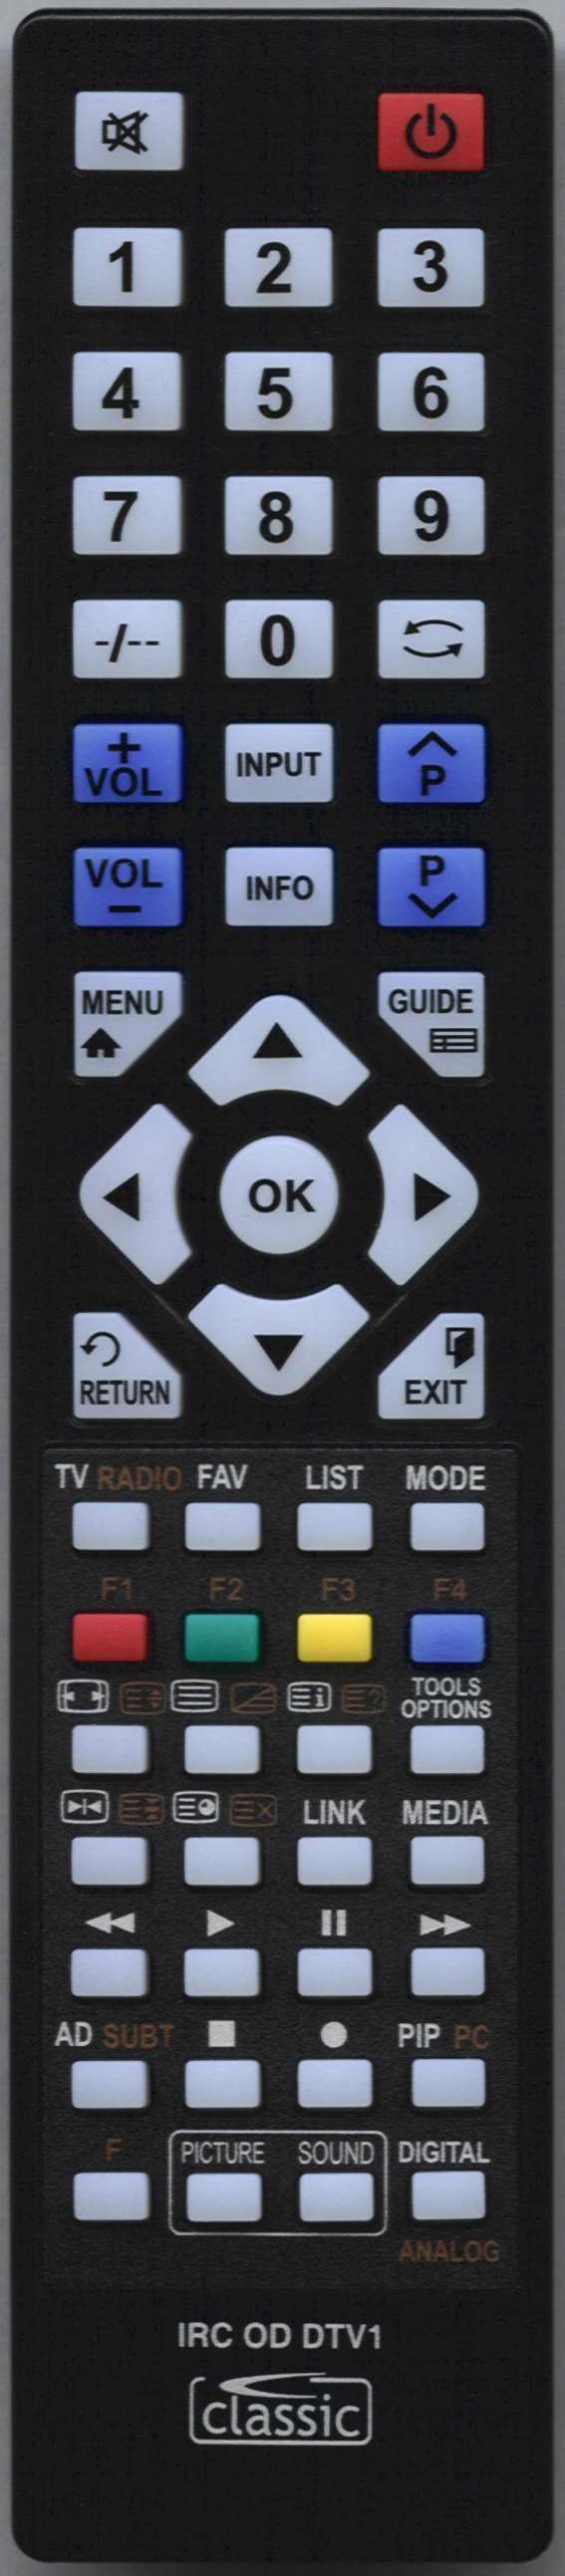 Baird TI46LEDBK Remote Control